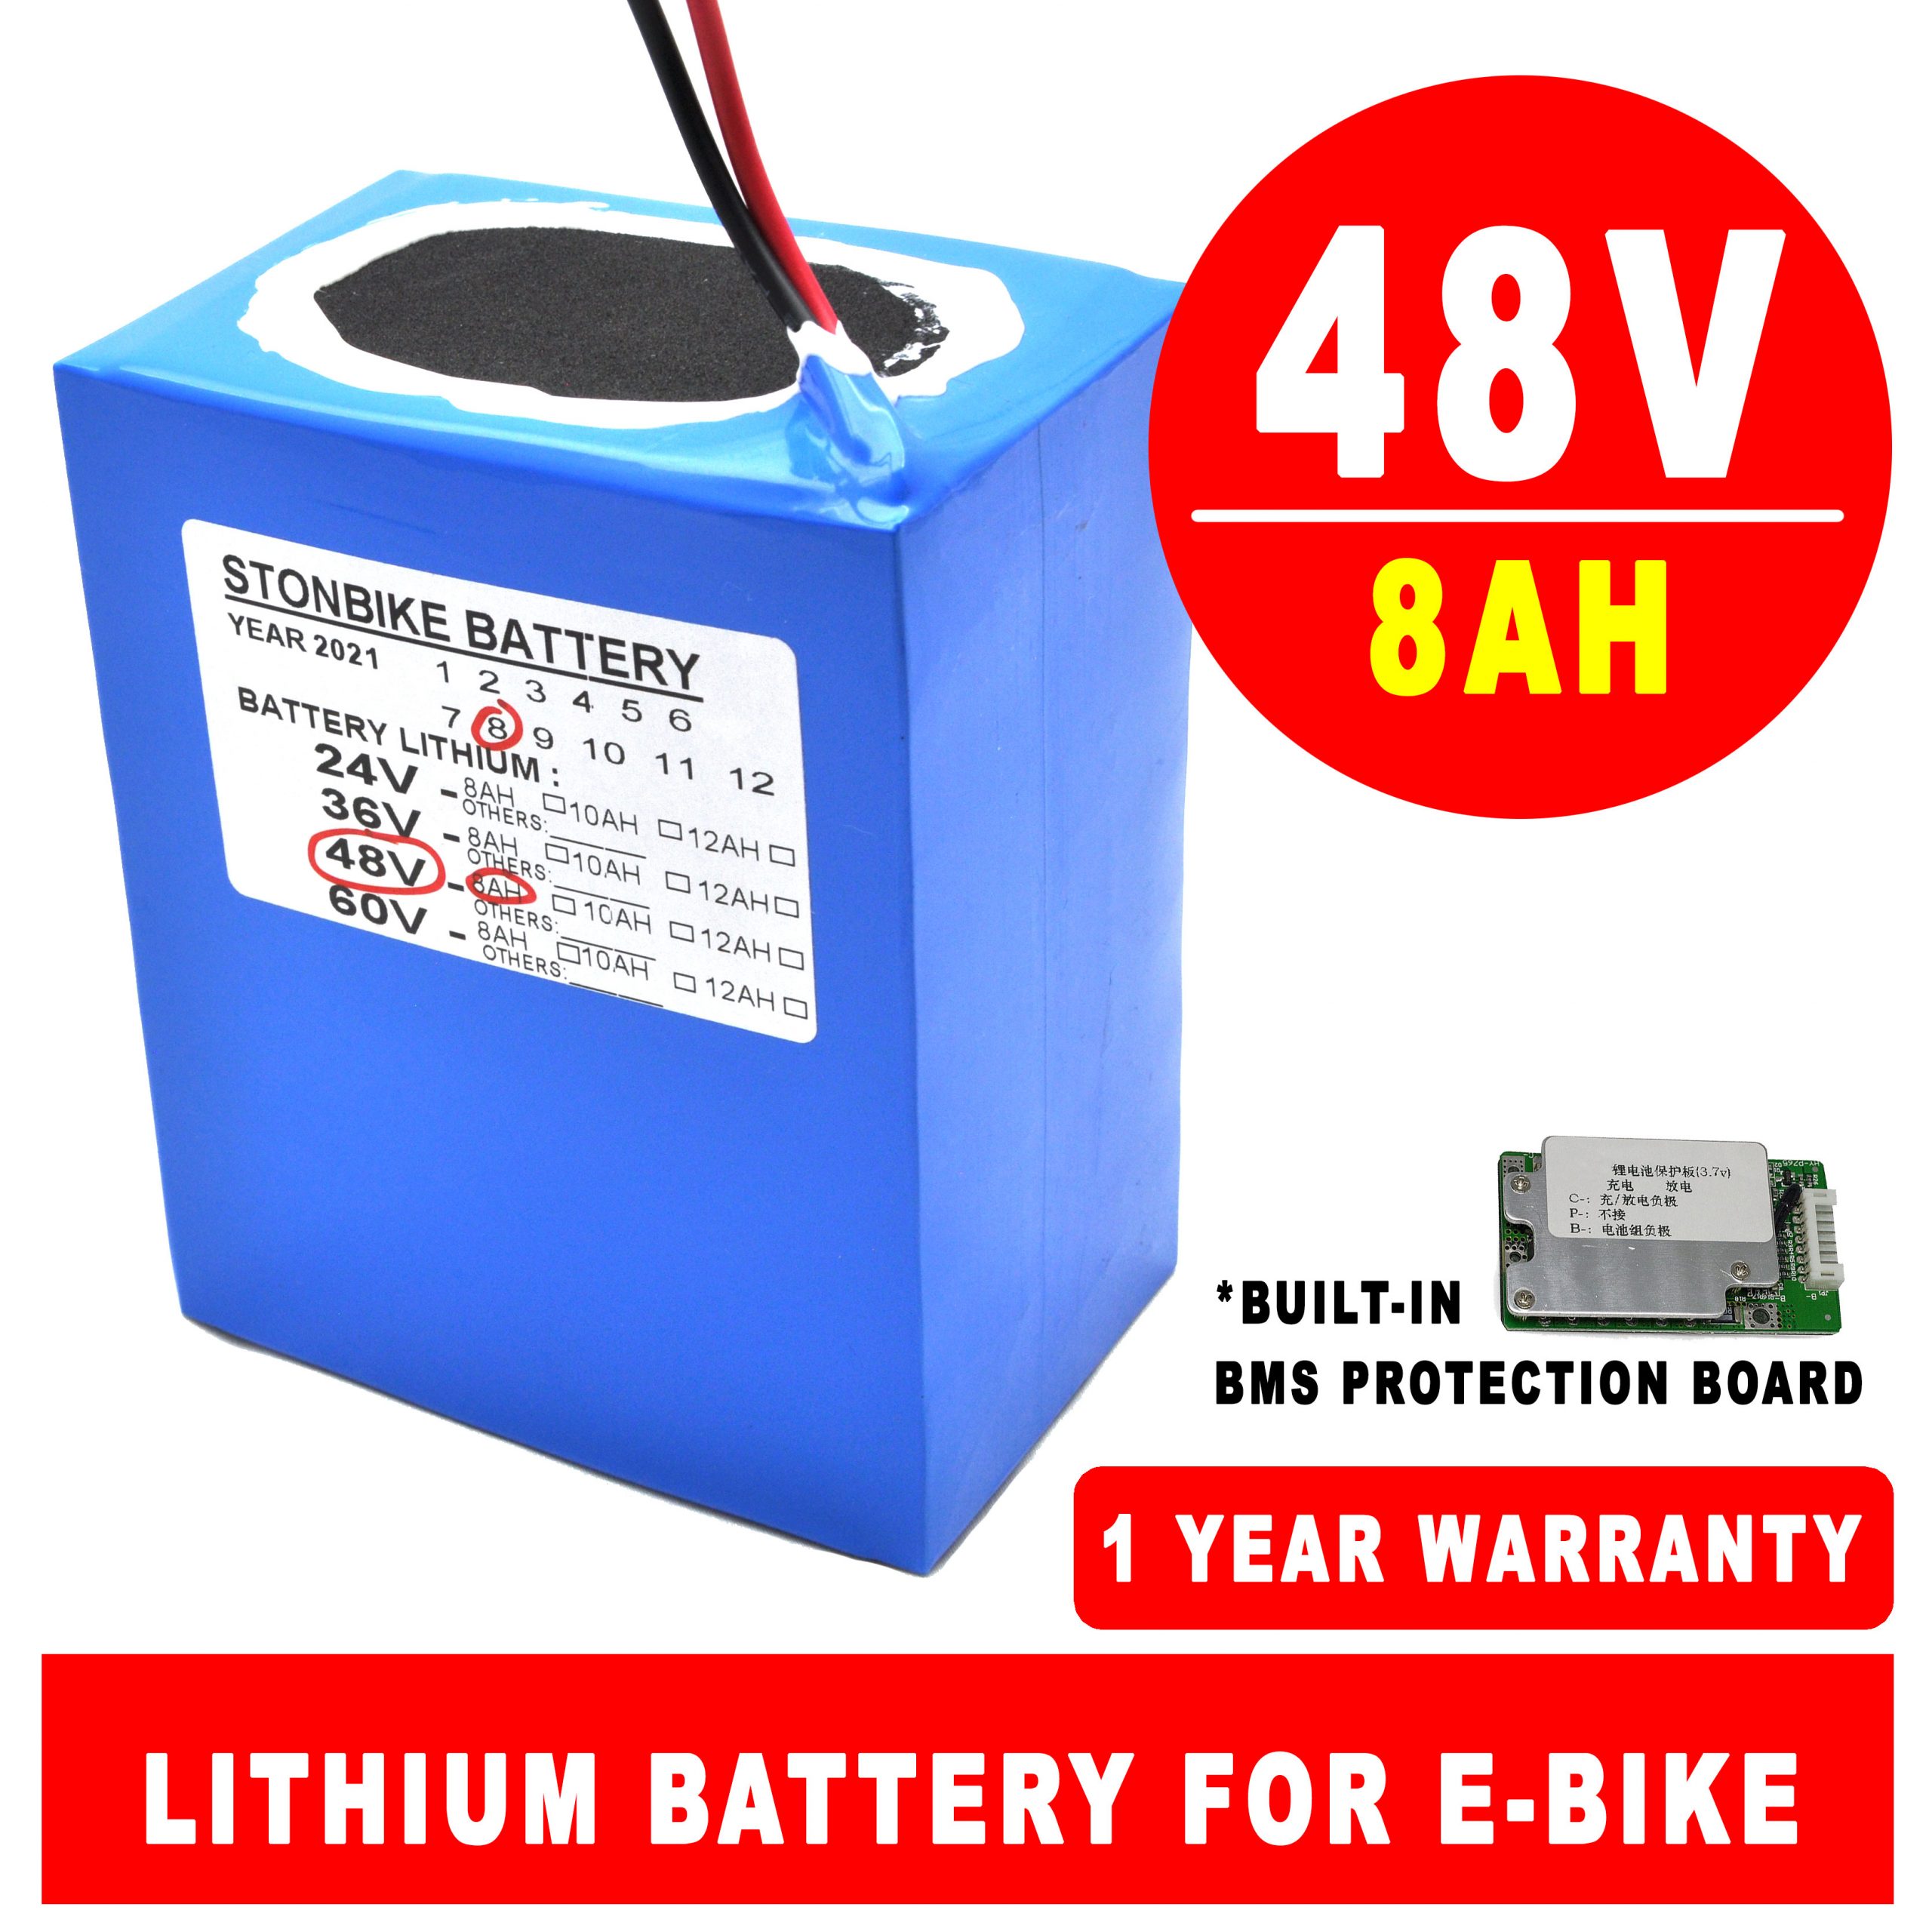 48V 8AH Lithium Battery Pack - Stonbike Lithium Battery